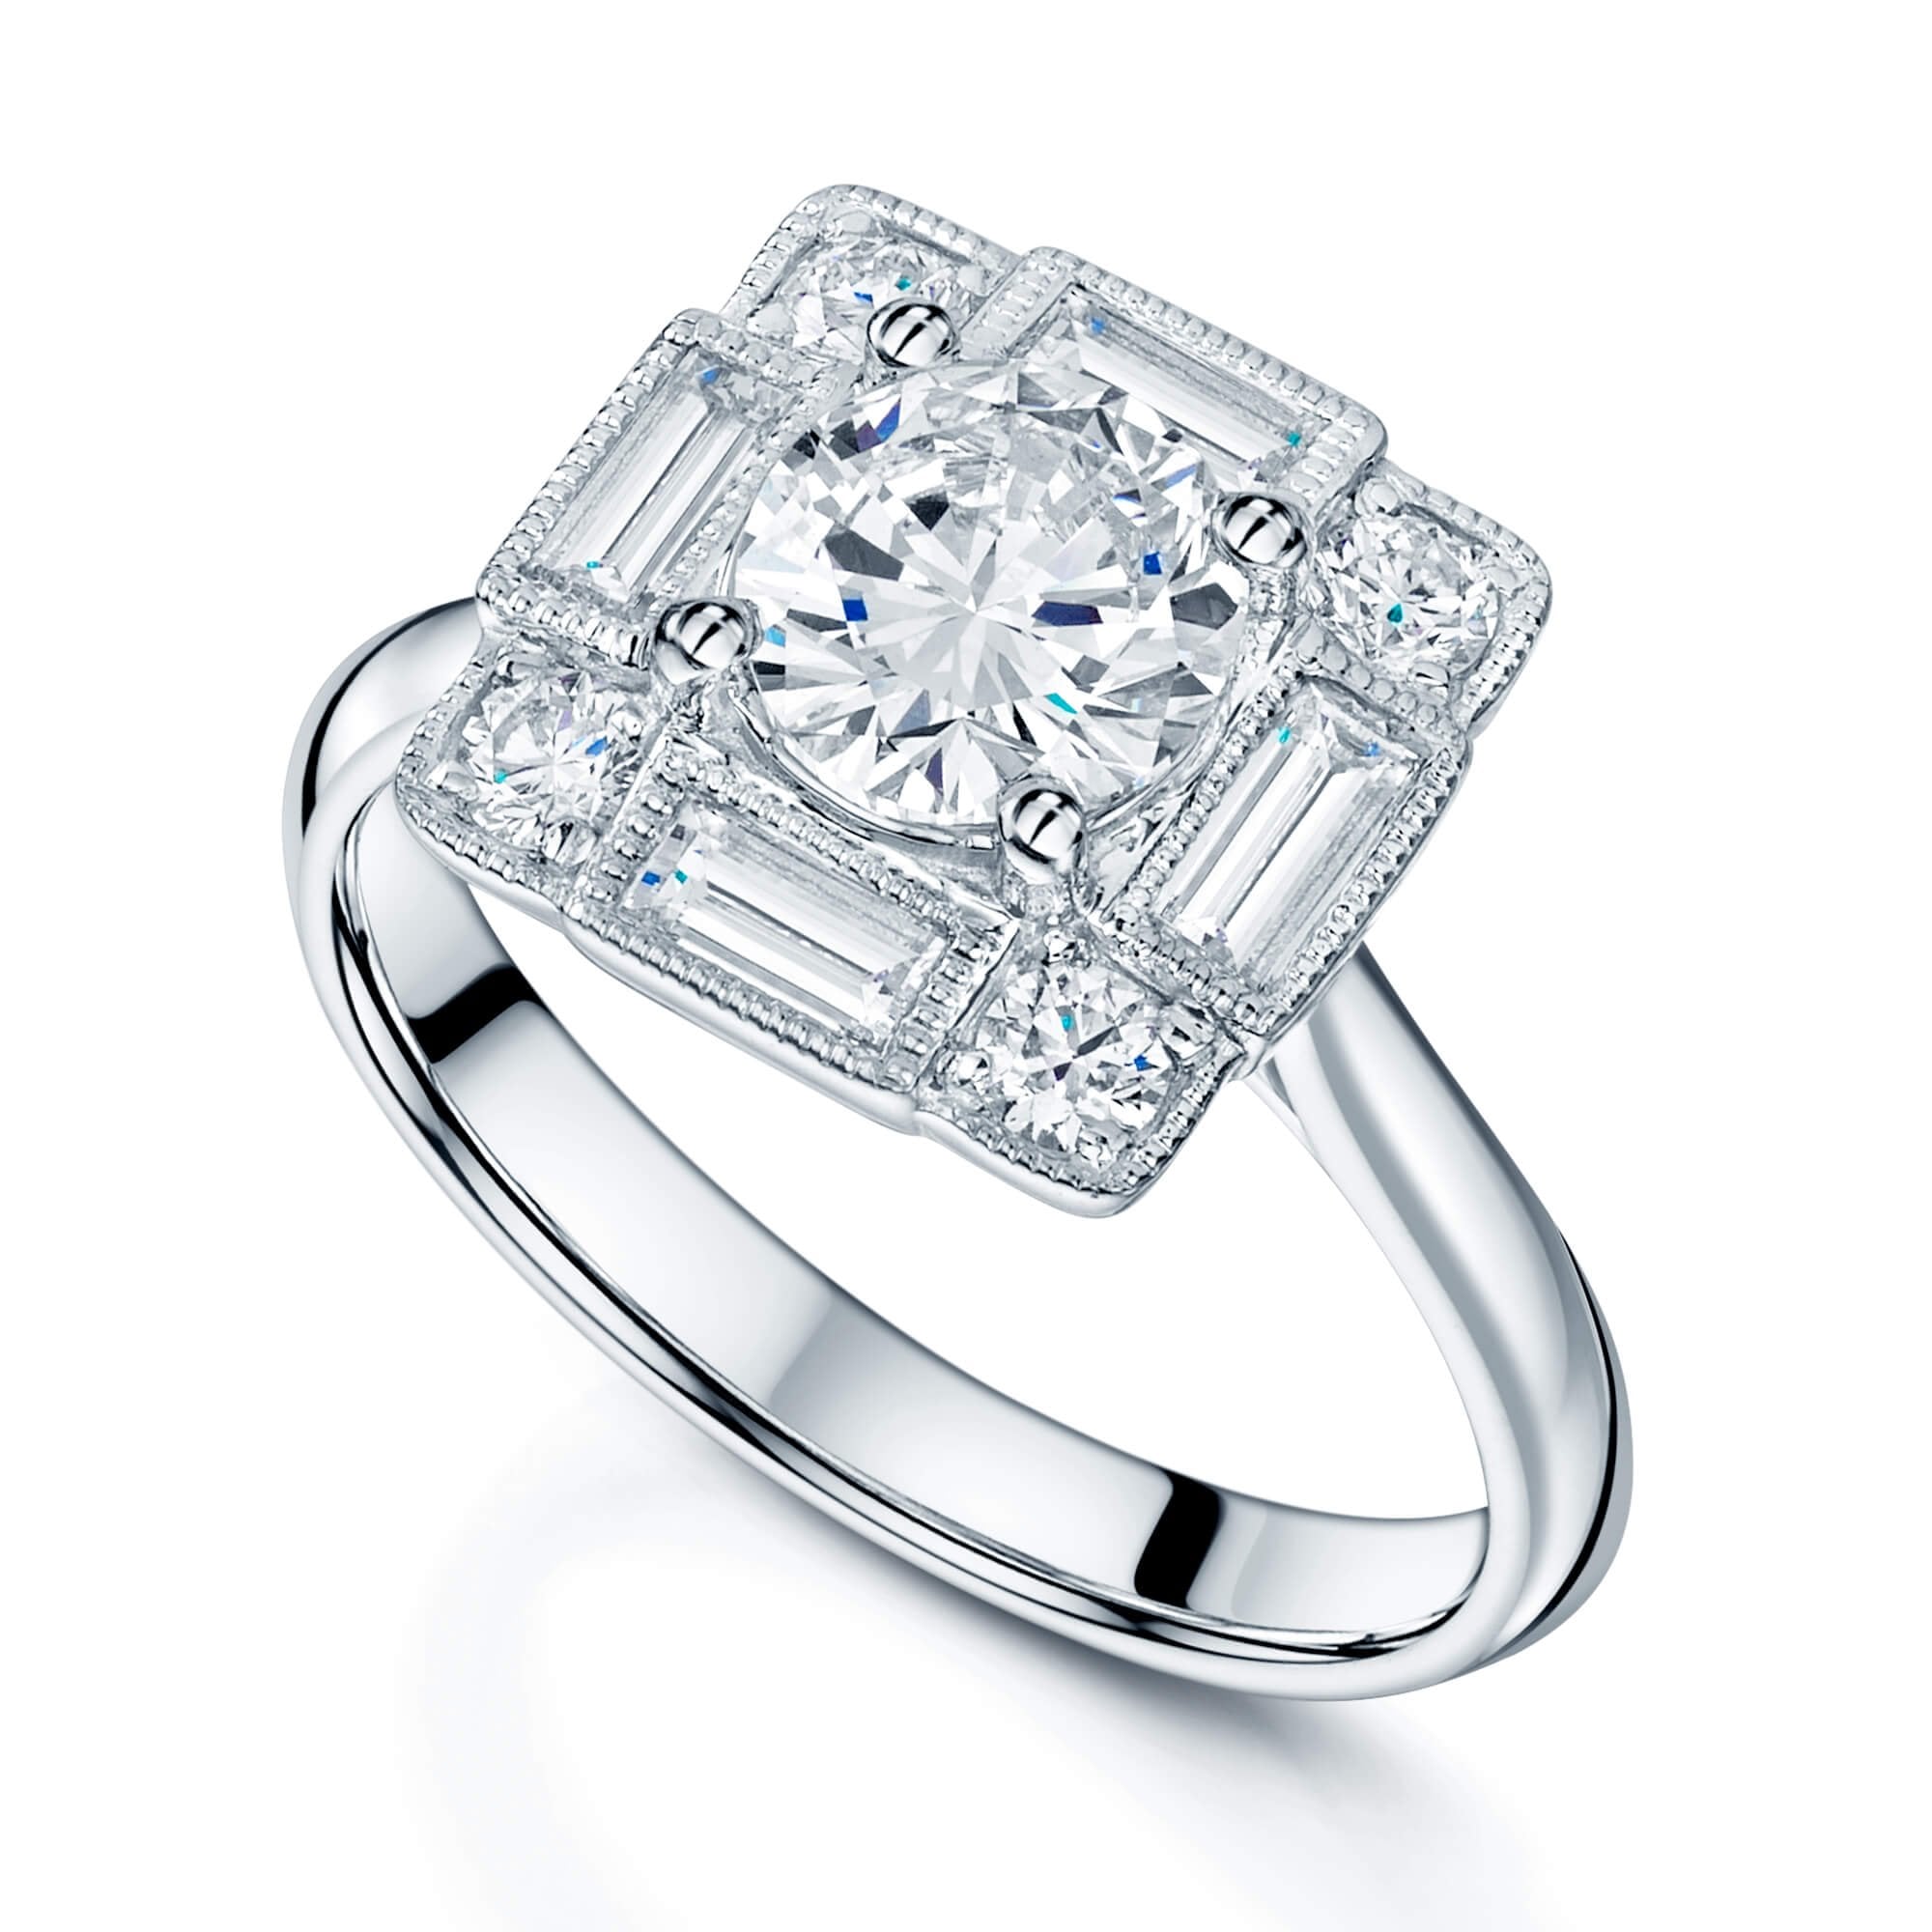 Platinum GIA Certificated Round Brilliant Cut Square Cluster Ring With Baguette And Round Brilliant Cut Diamonds In A Millgrain Surround